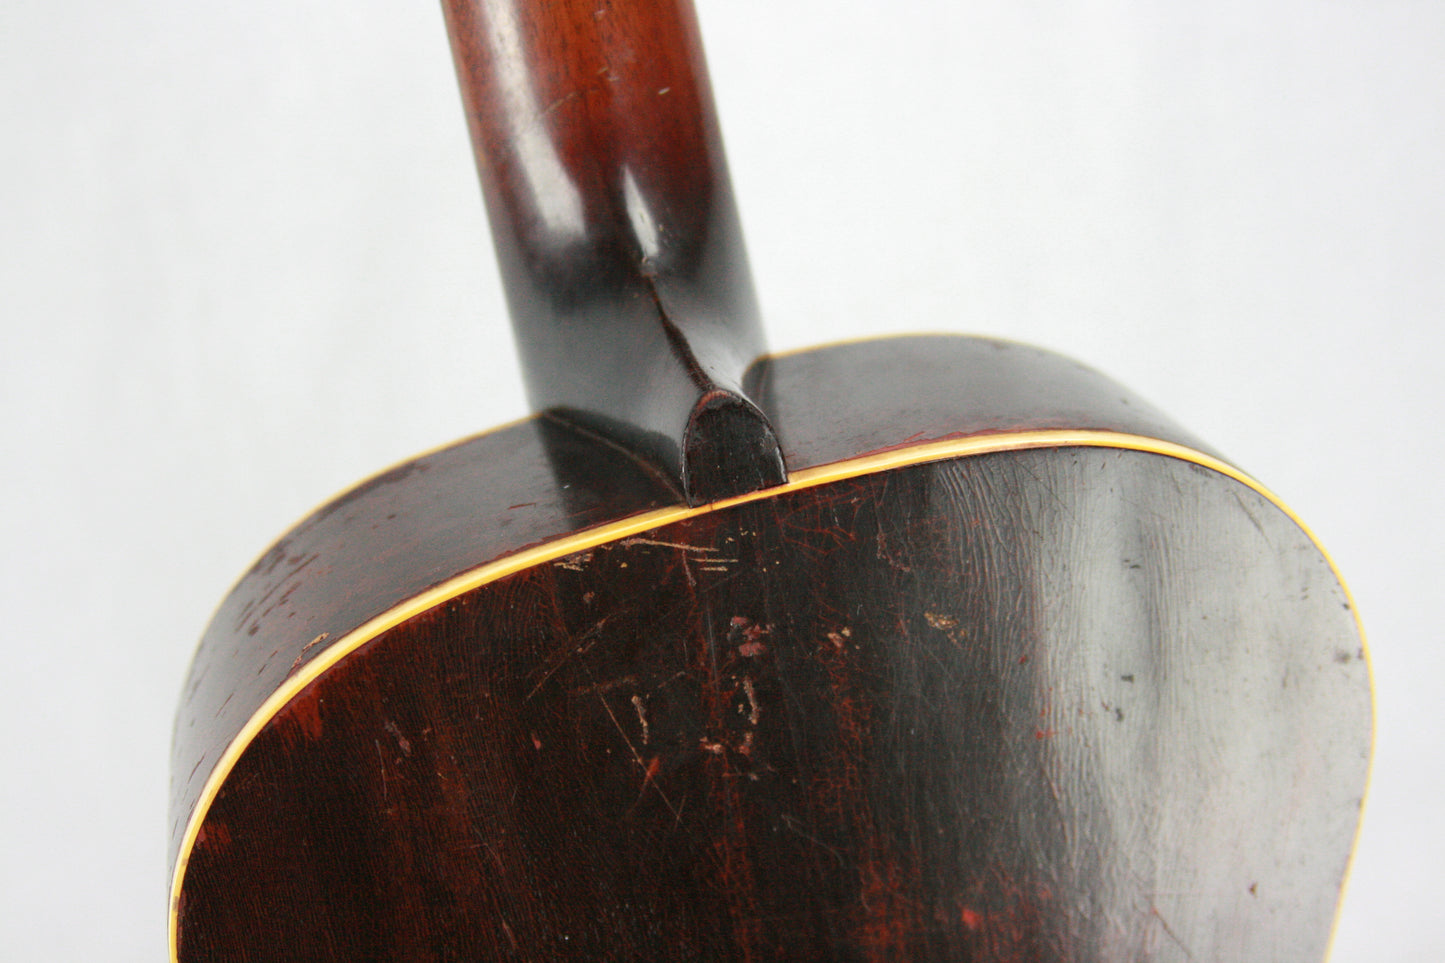 1934 Gibson L-50 Round Soundhole Prewar Archtop Acoustic Guitar! 4 7